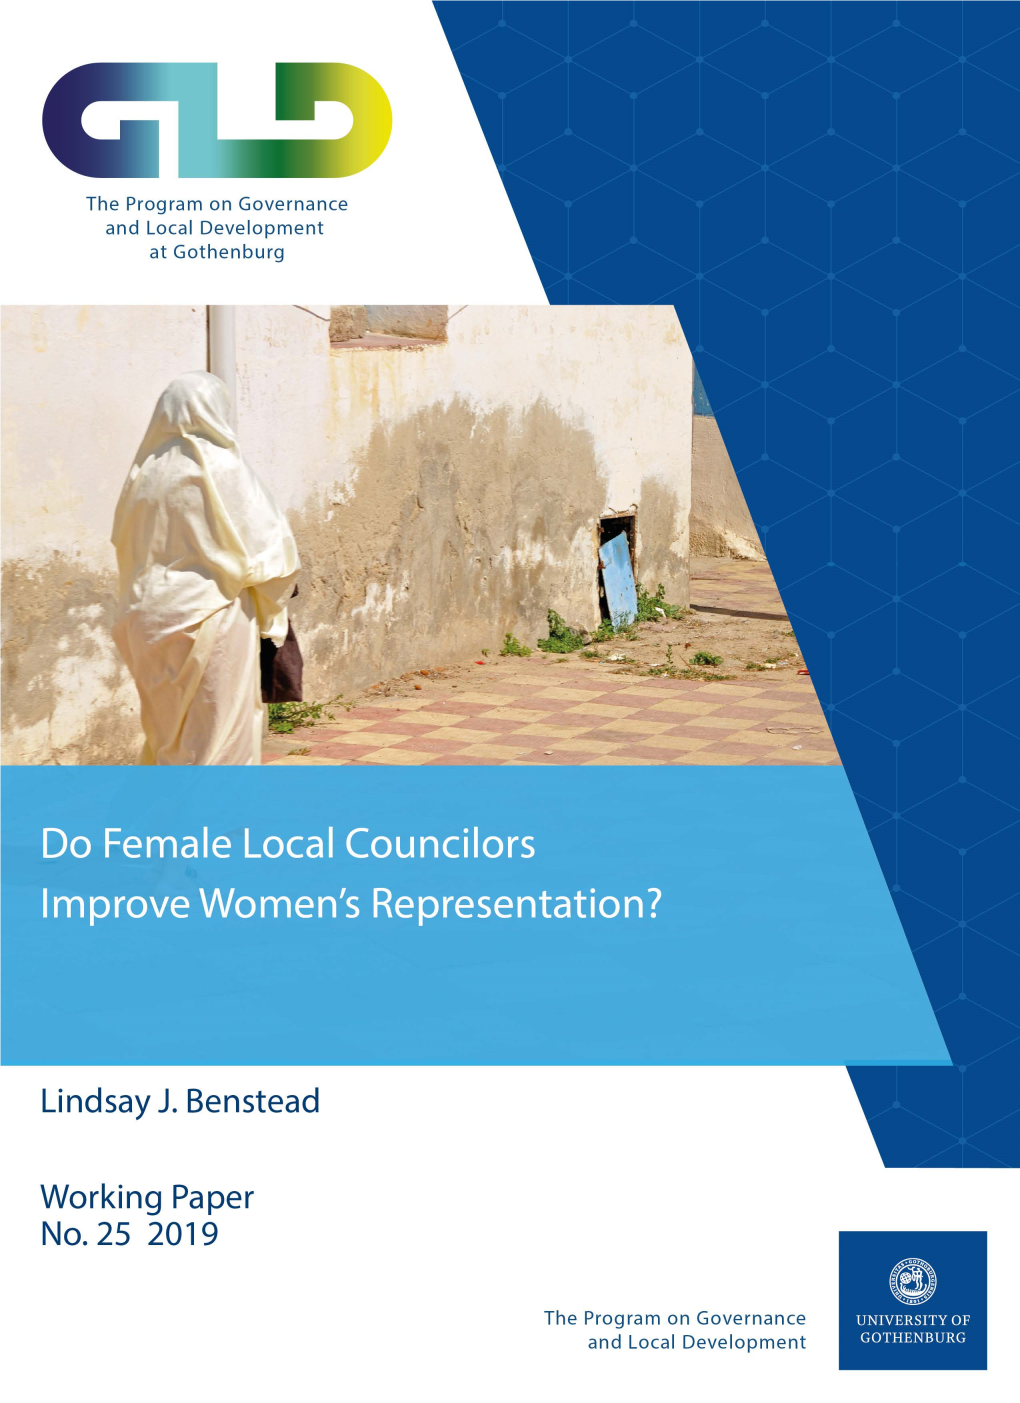 5. Representation in Local Councils